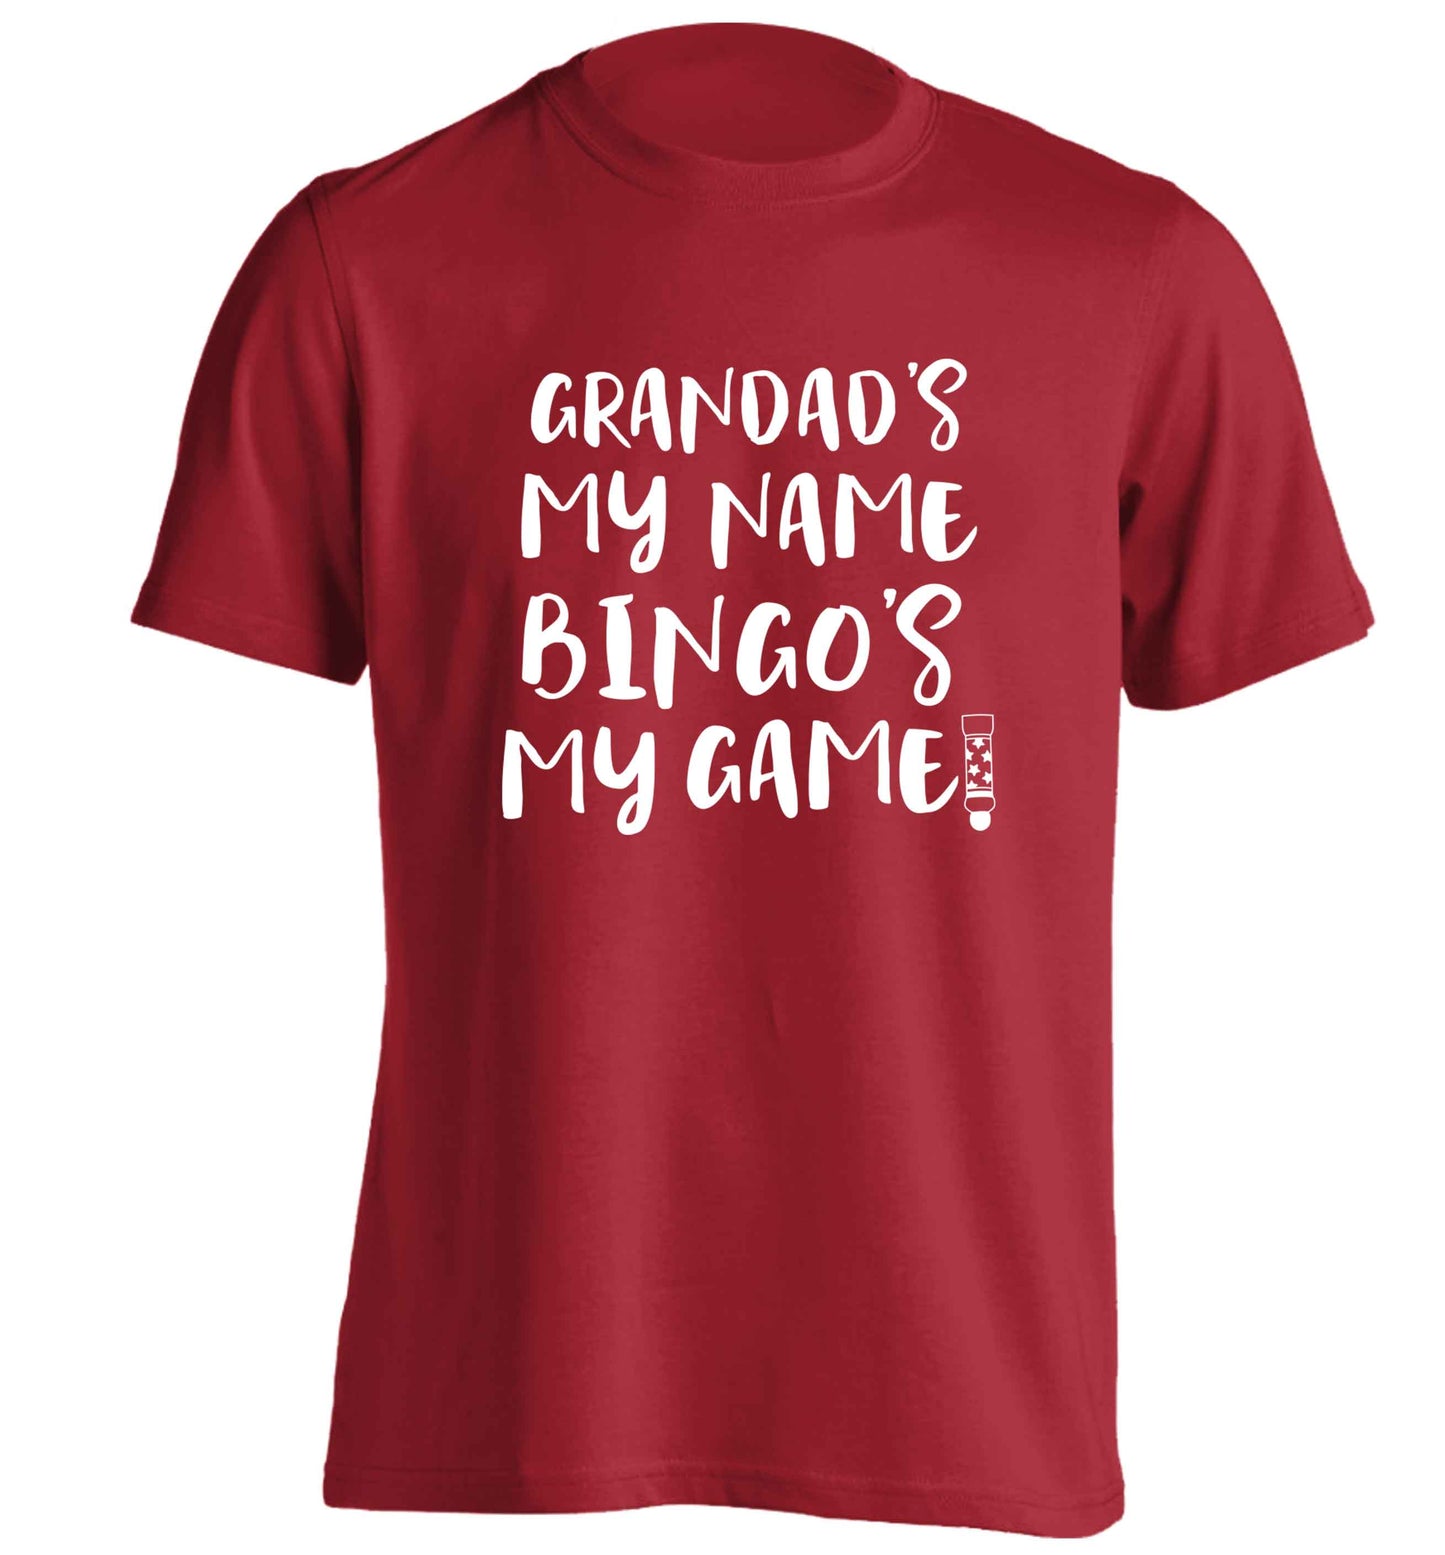 Grandad's my name bingo's my game! adults unisex red Tshirt 2XL